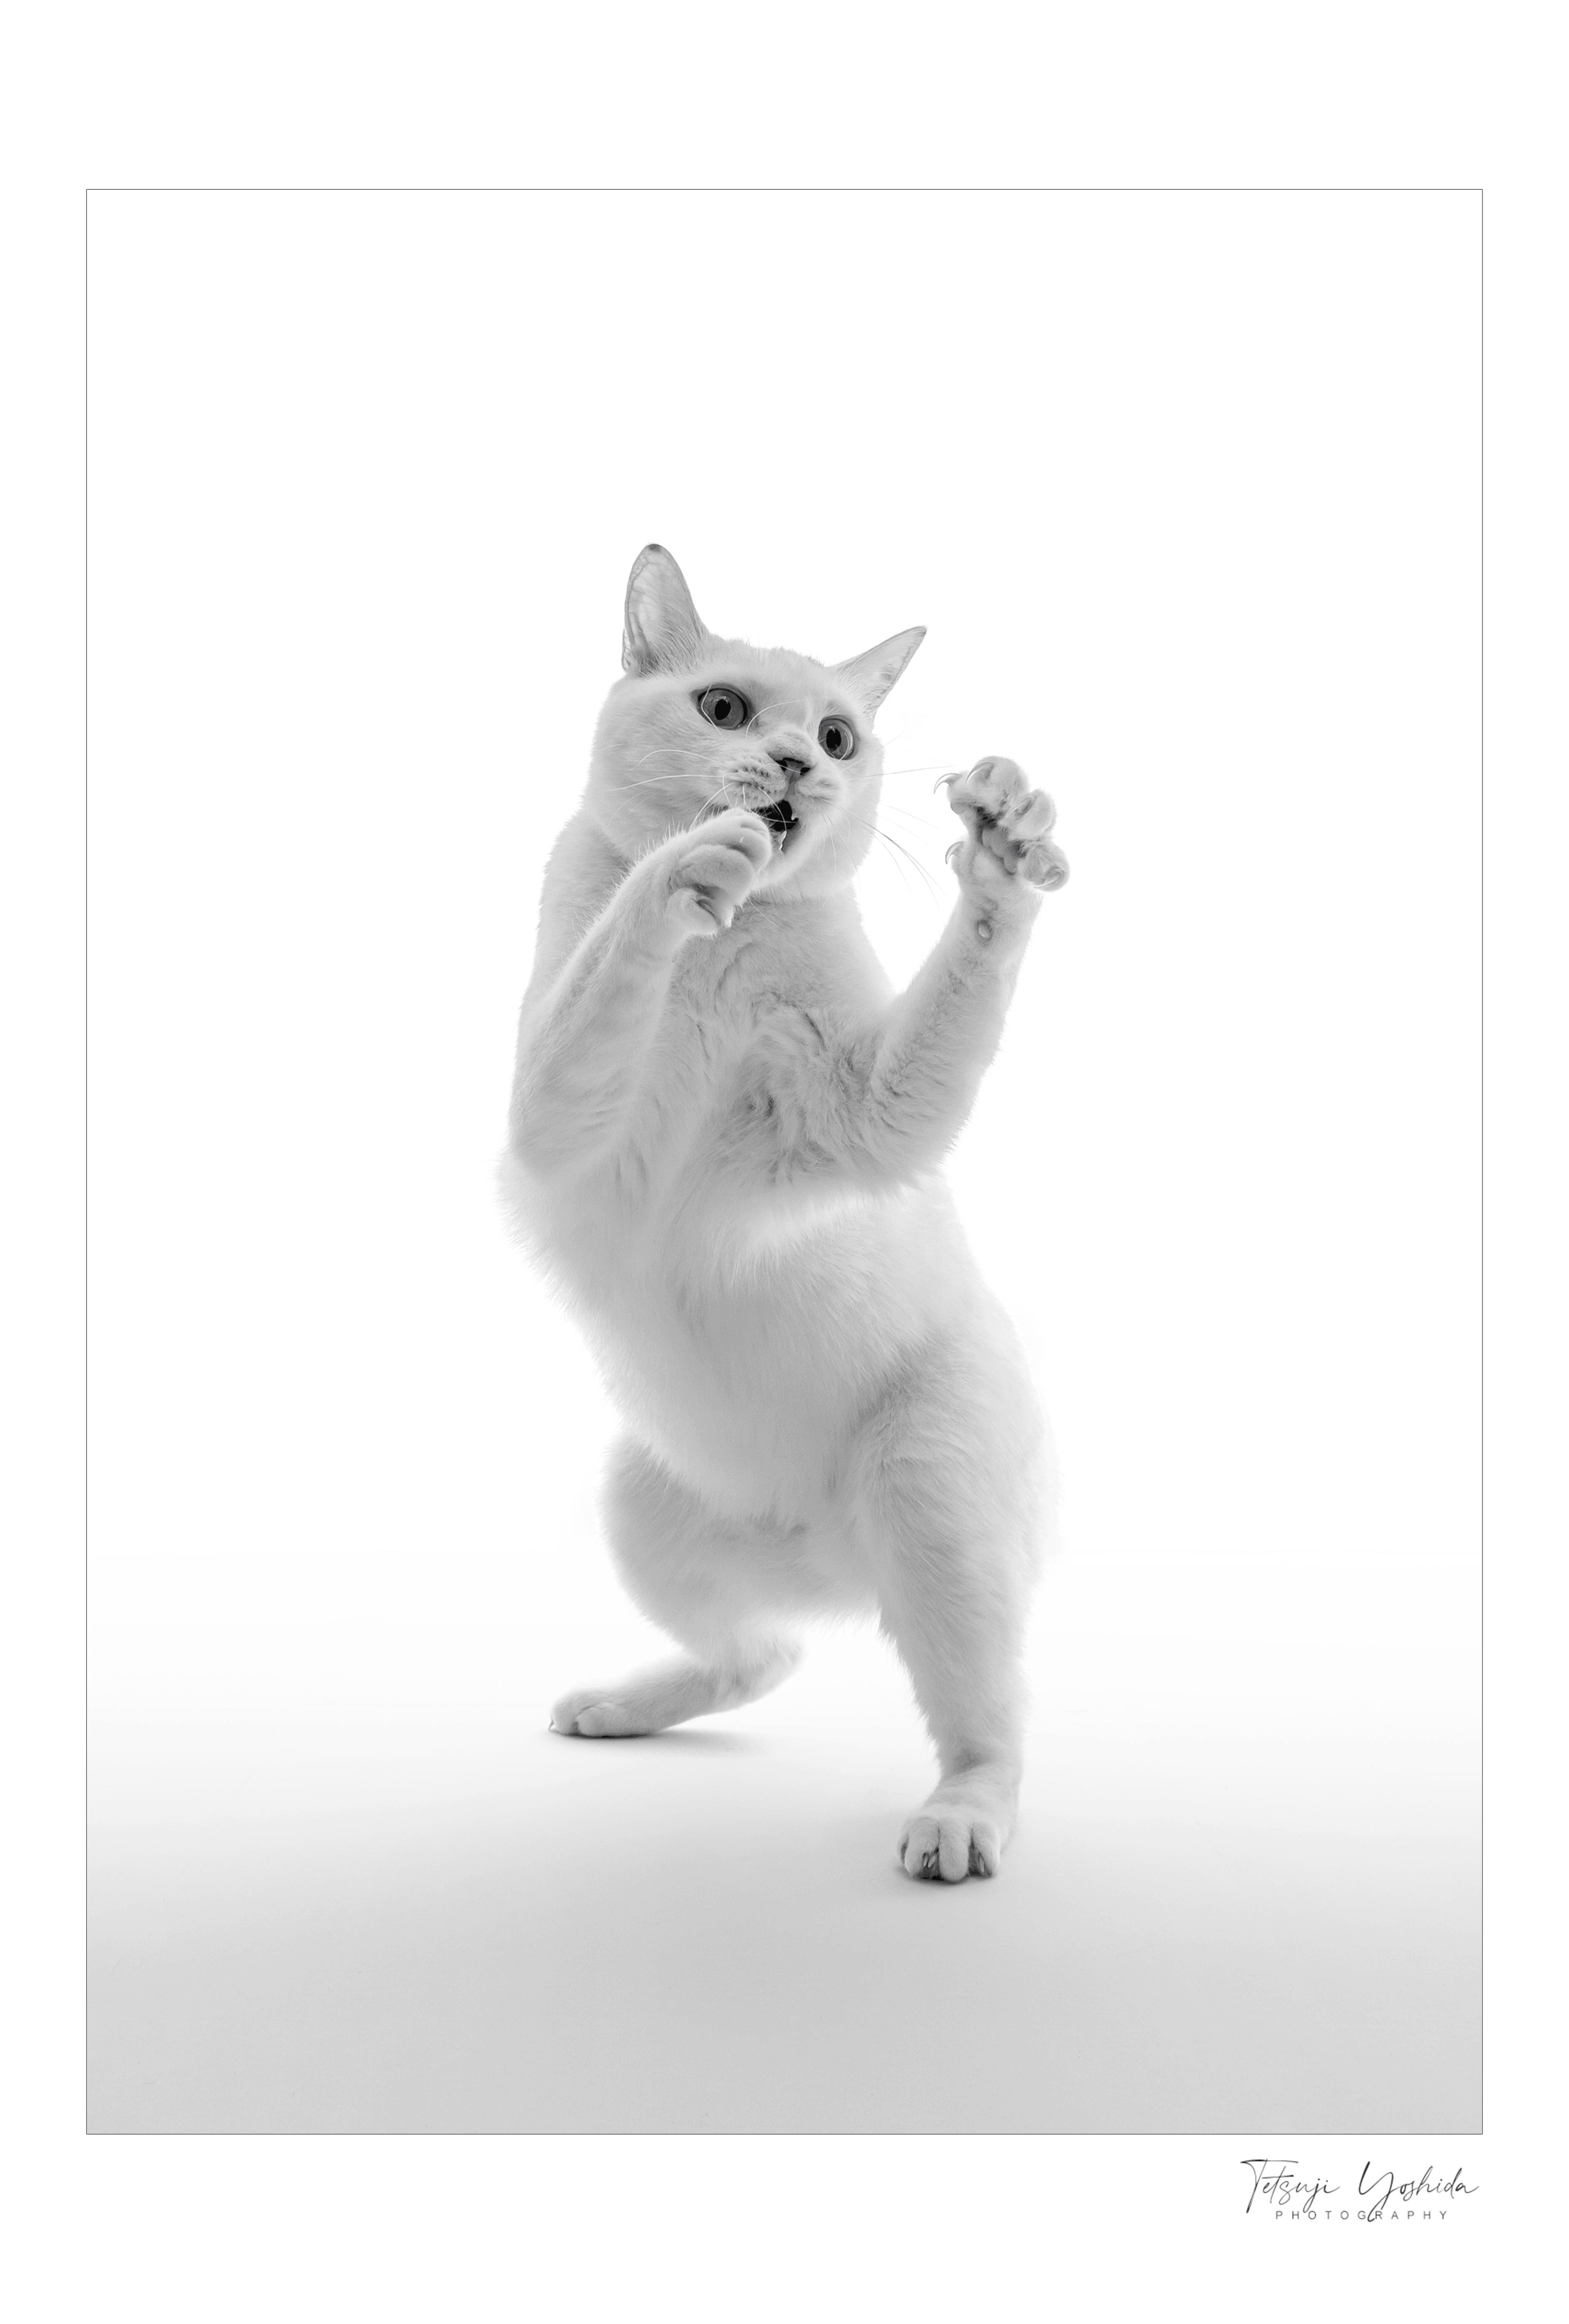 Teto the white cat  "Fighting Pose"